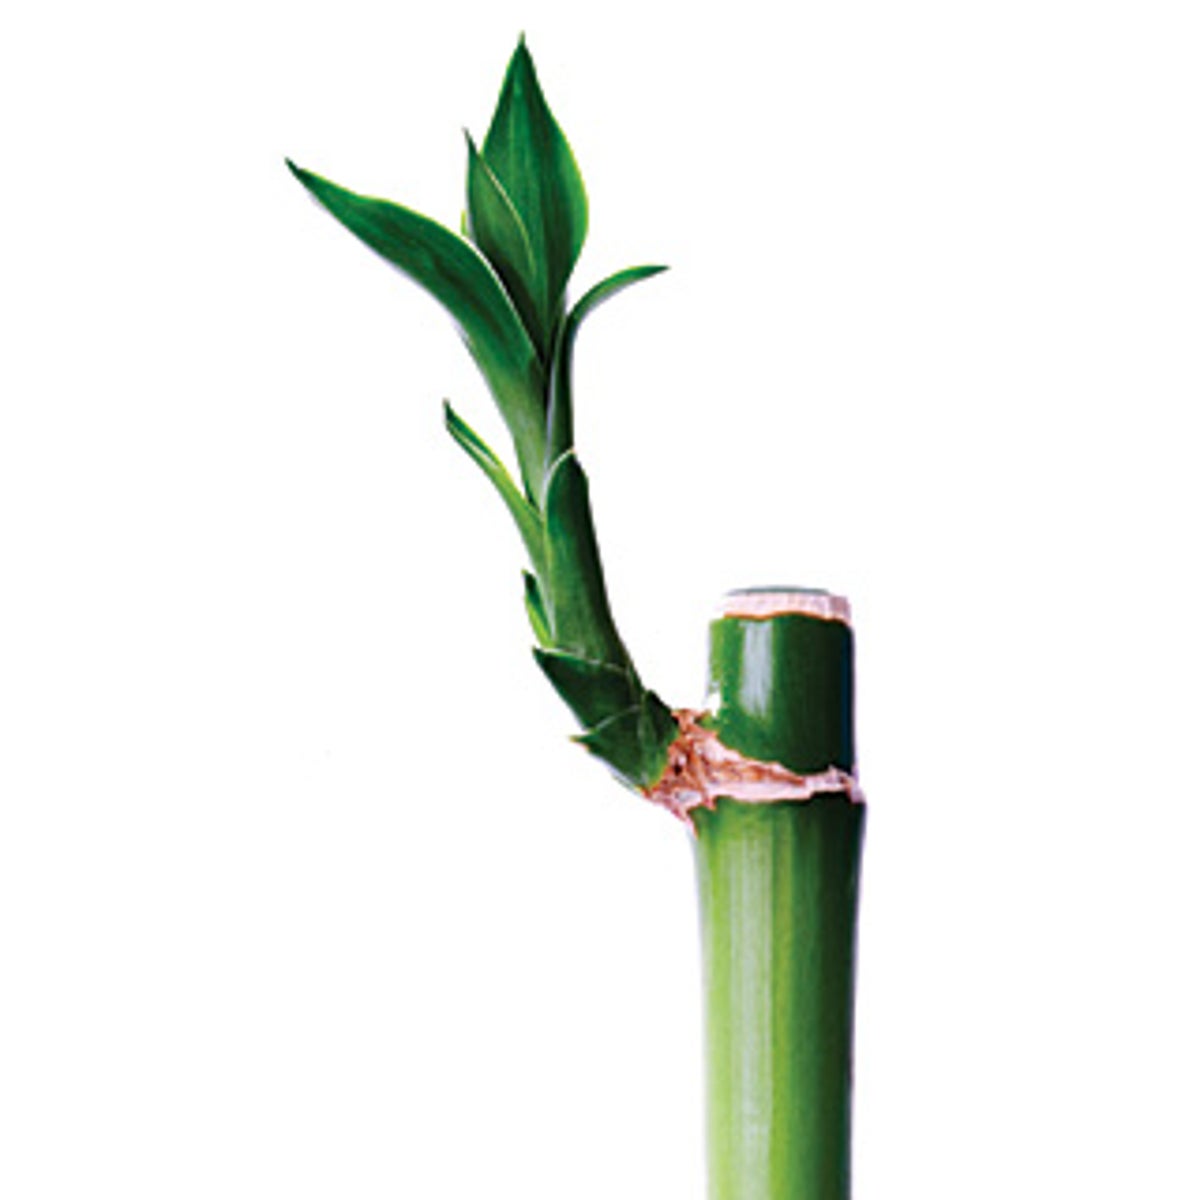 Is Bamboo a Tree? Science vs Politics